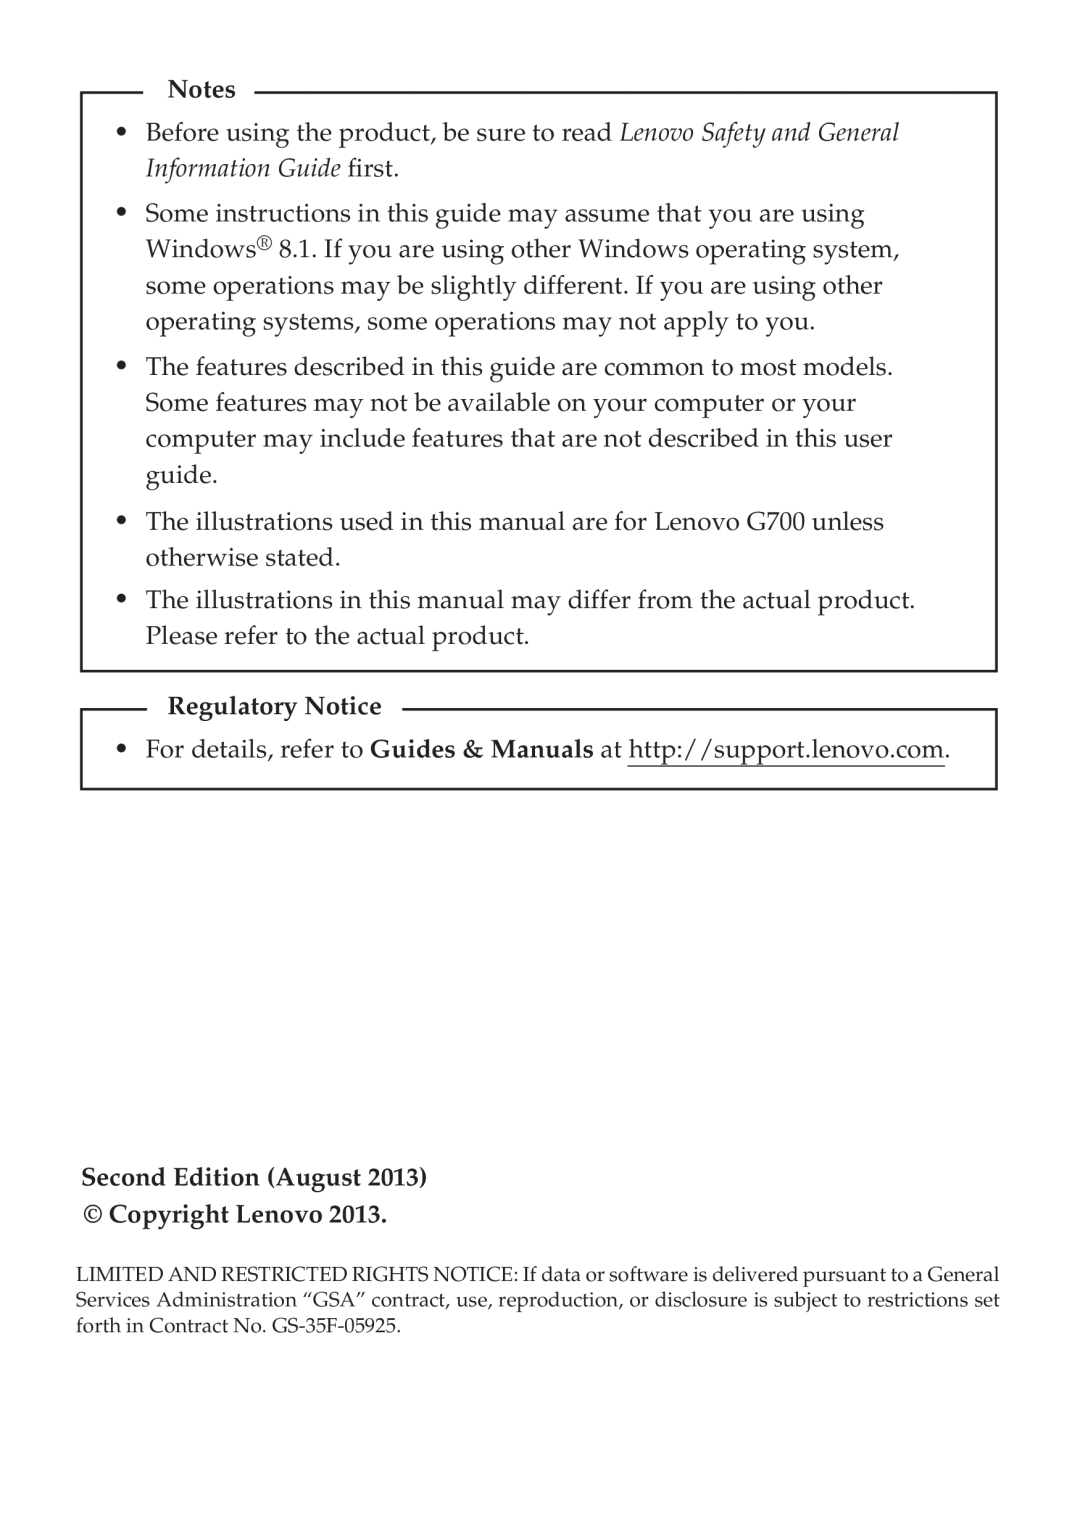 Lenovo 59375192 manual Notes, Regulatory Notice, Second Edition August Copyright Lenovo 